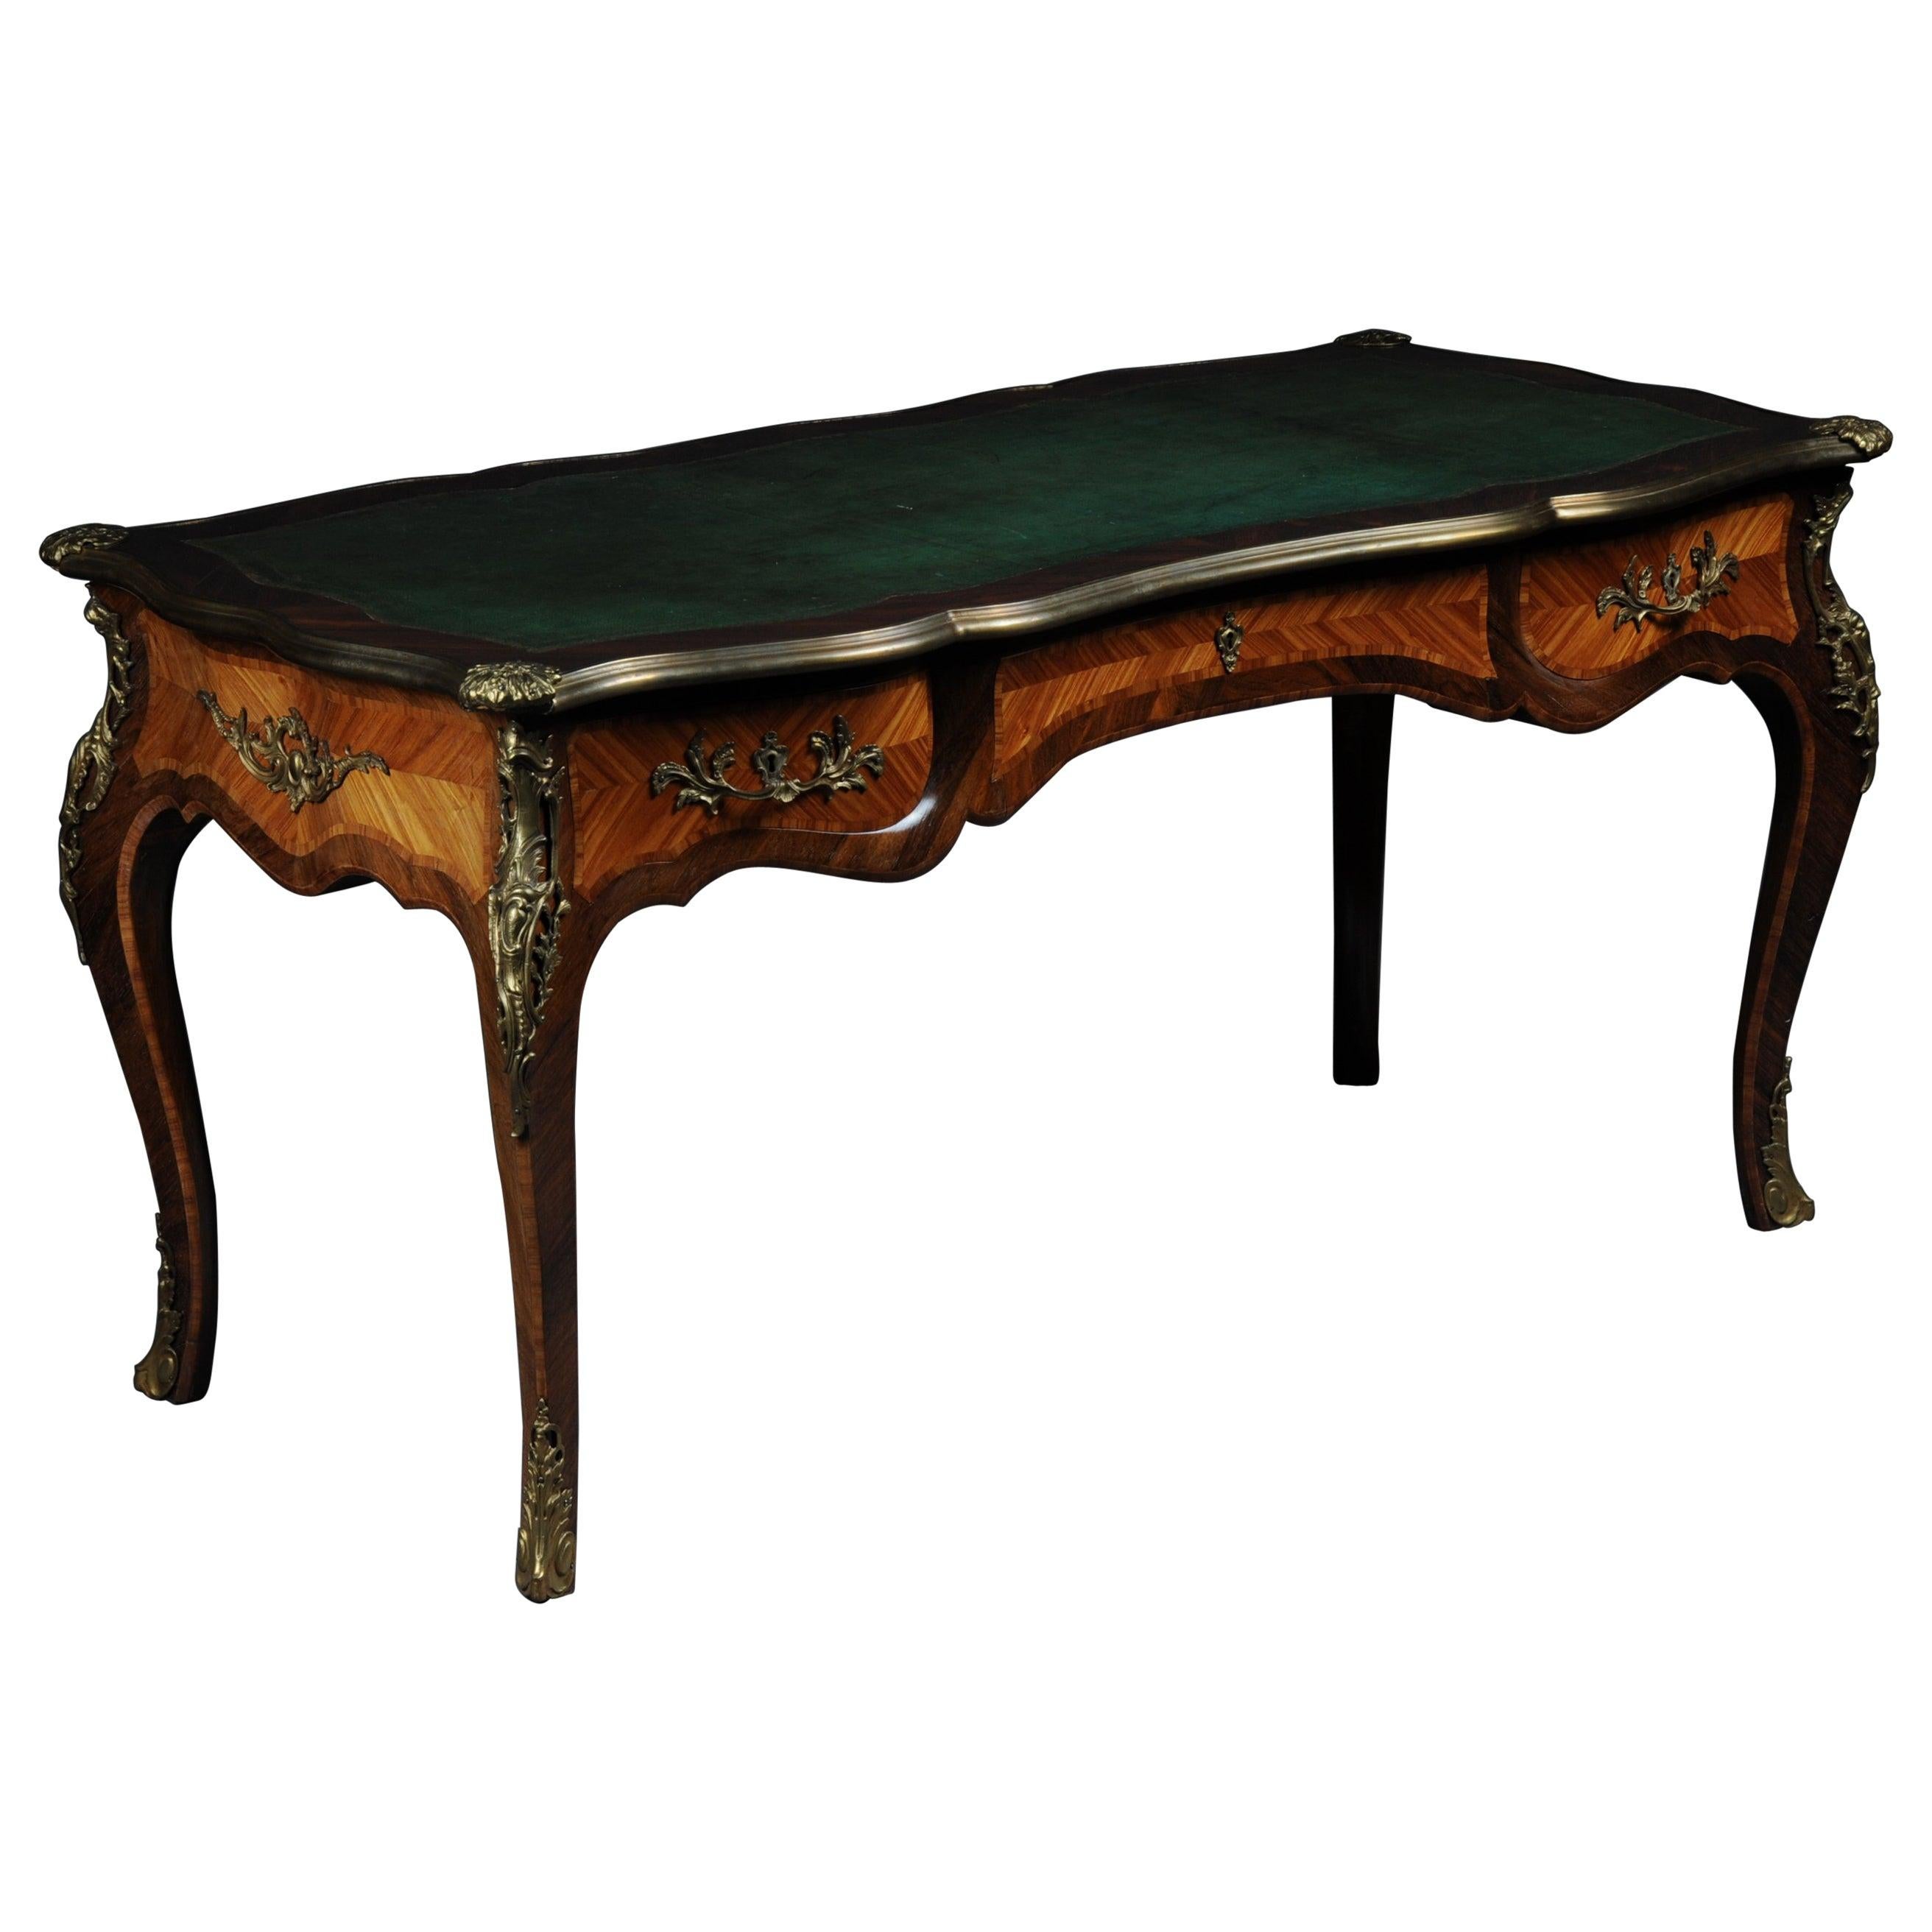 Glorious Bureau Plat or Desk in Louis XV For Sale